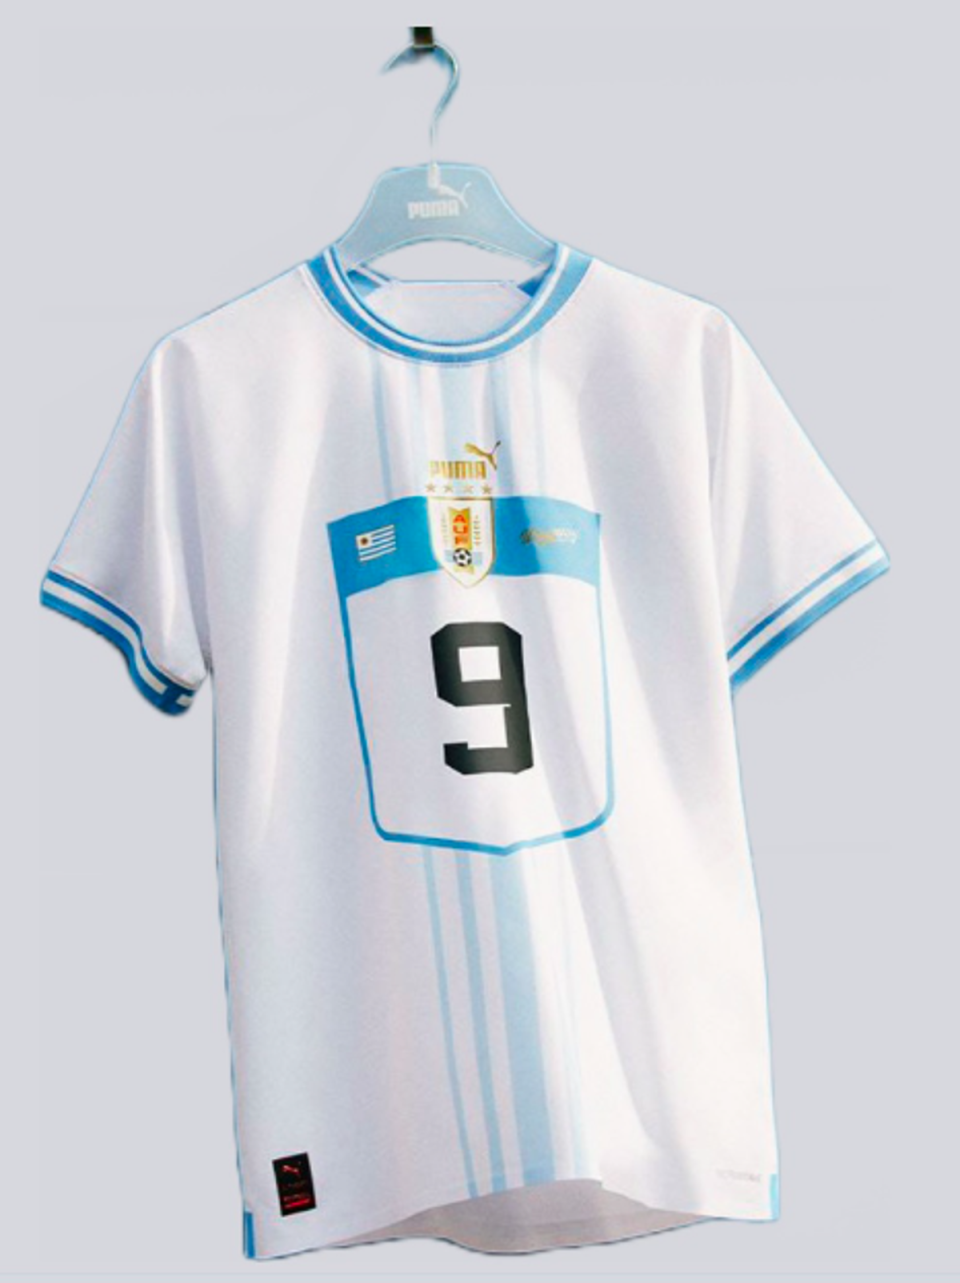 Uruguay away (Puma)